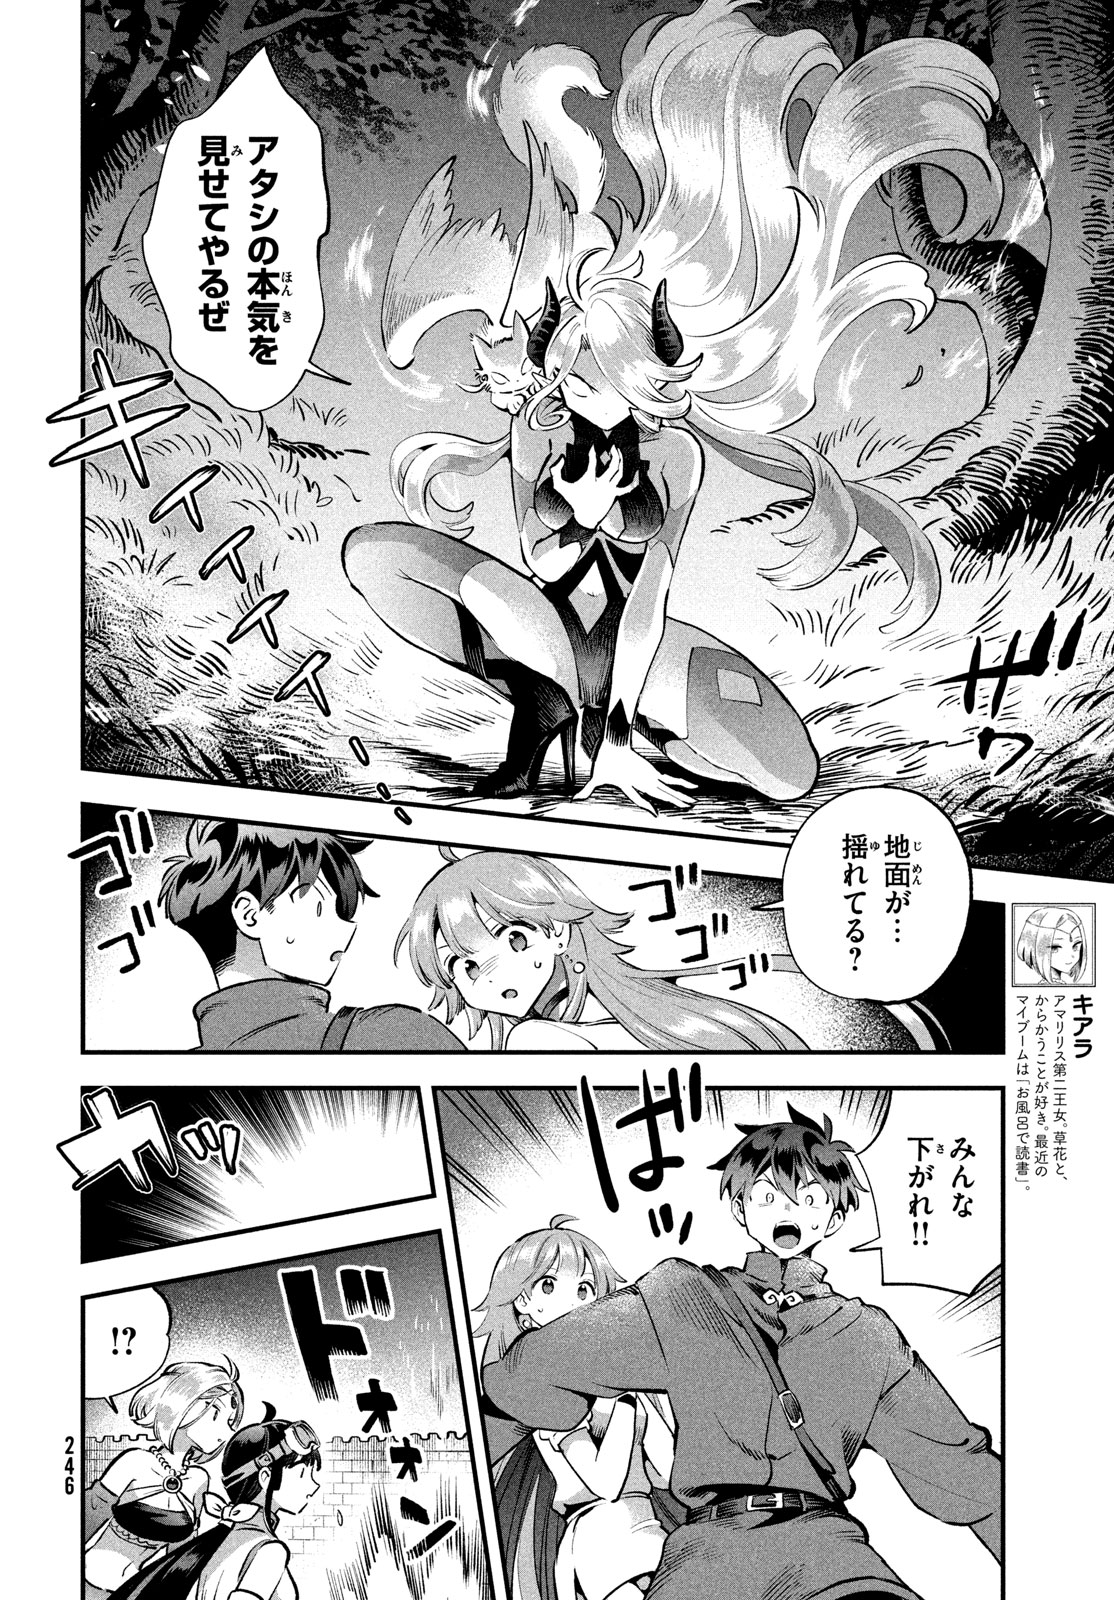 7-nin no Nemuri Hime - Chapter 47 - Page 6